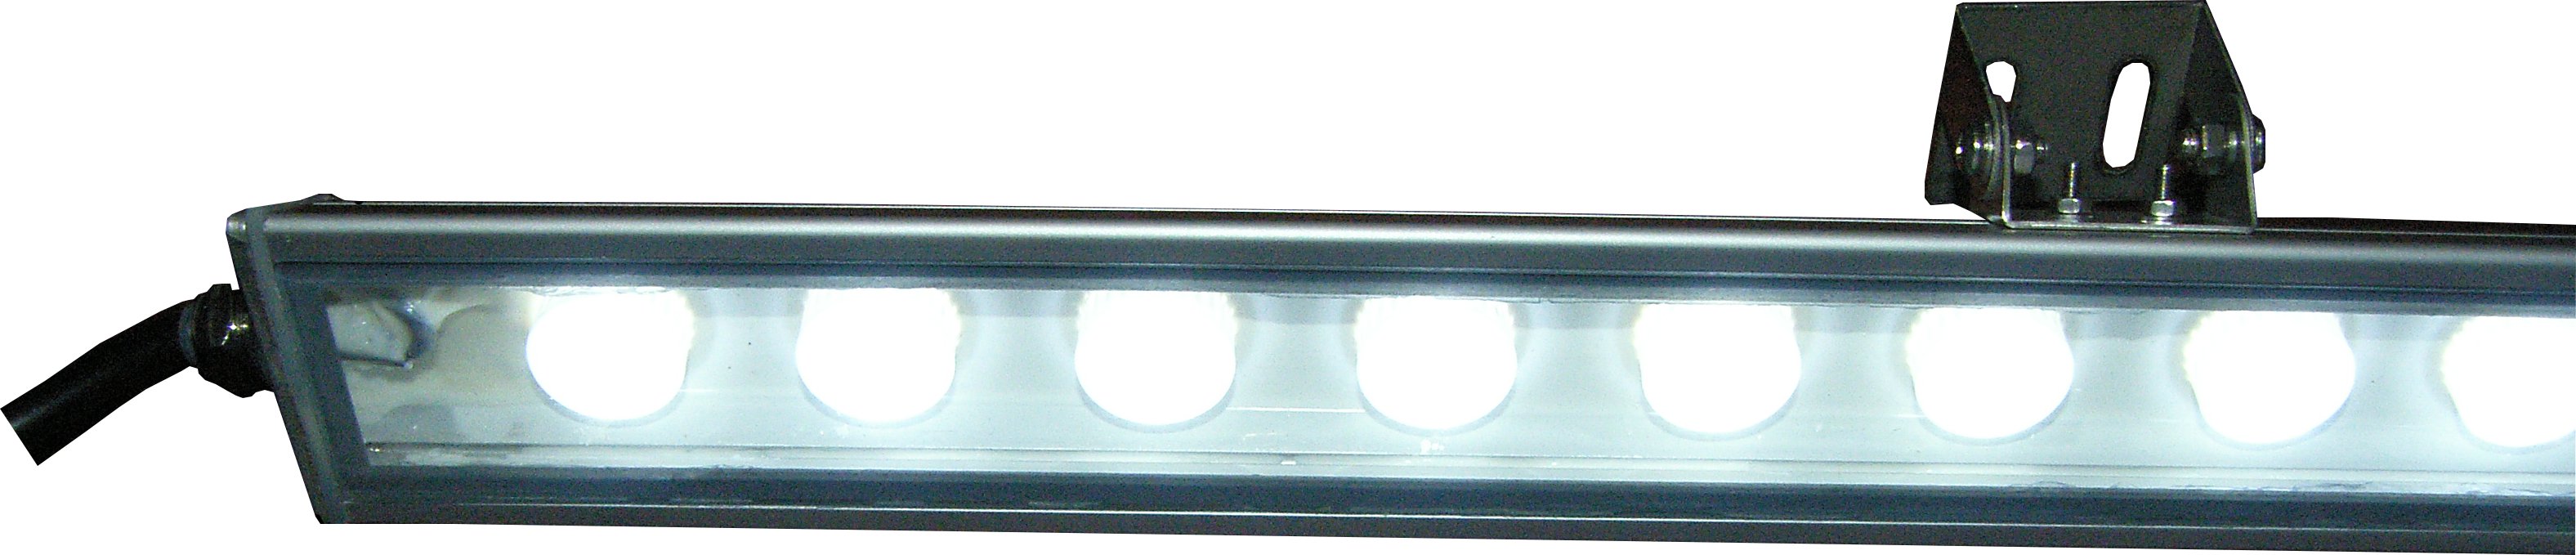 Aquariumbeleuchtung dimmbare LED-Balken als Ersatz fÃ¼r T5 RÃ¶hren